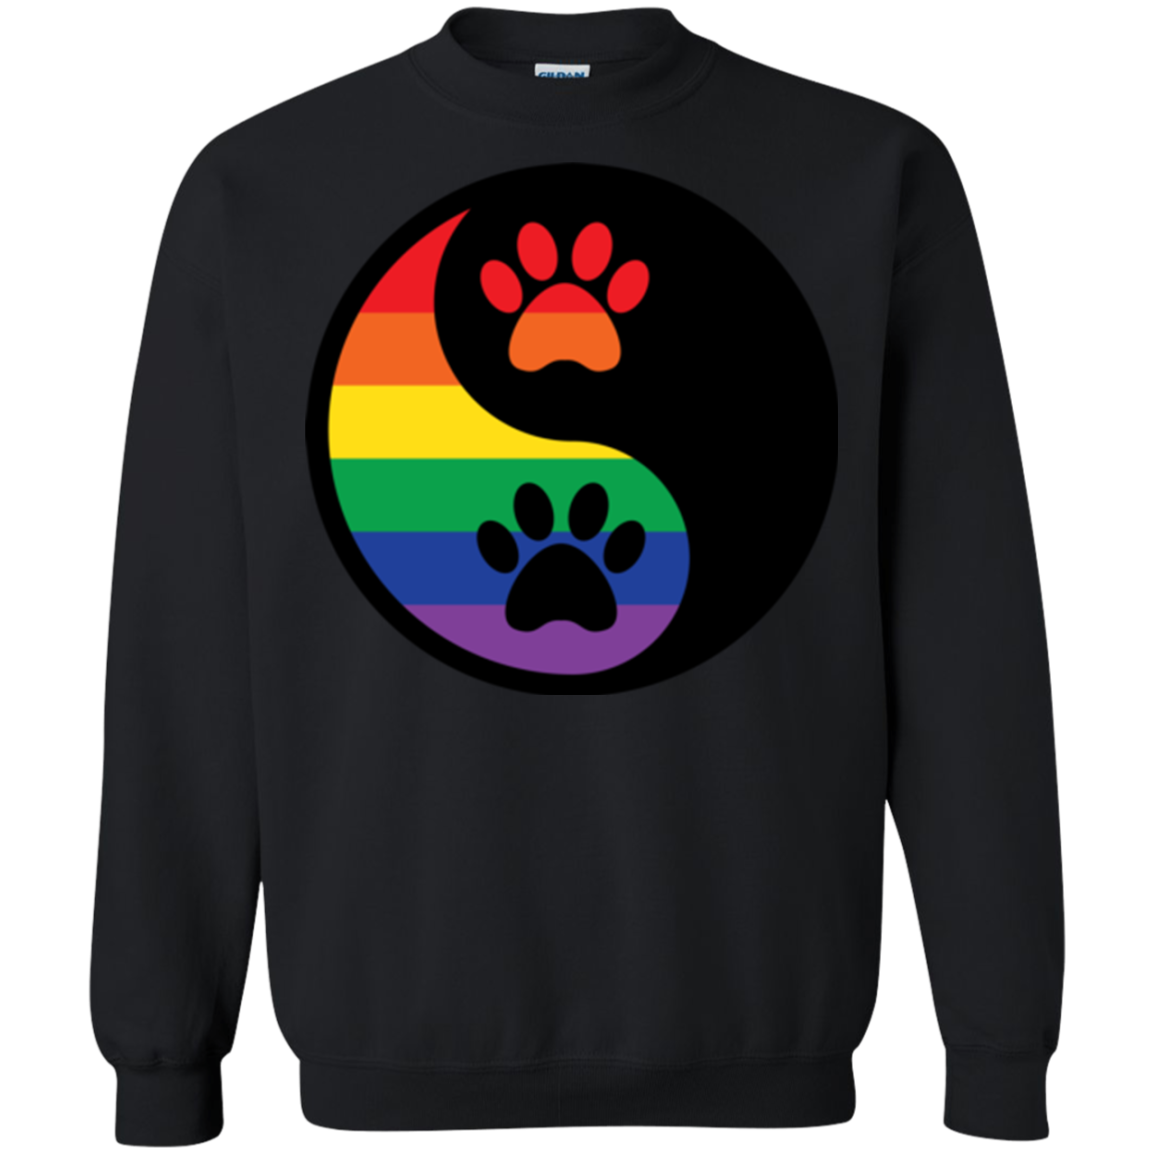 Rainbow Paw Yin Yang Pet long sleeves black sweatshirt For Men &  women LGBT Pride sweatshirt for Men Women